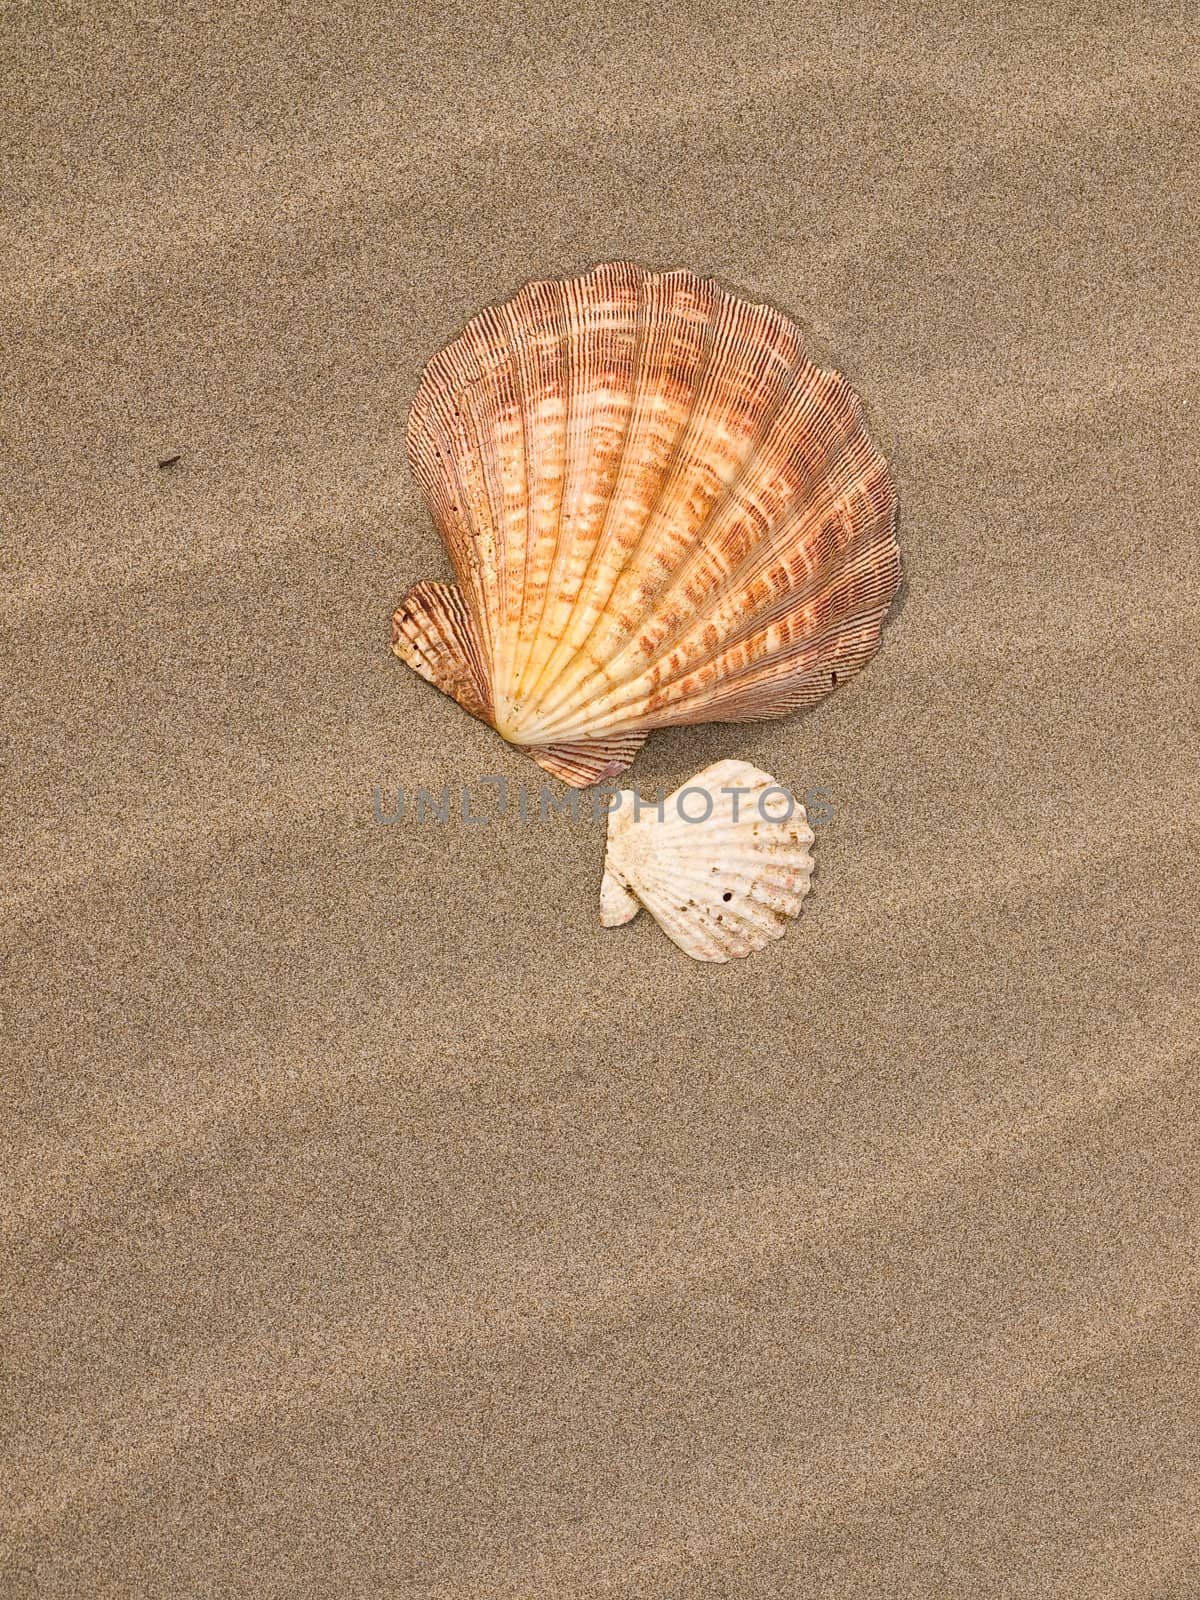 Scallop Shells on a Wind Swept Sandy Beach